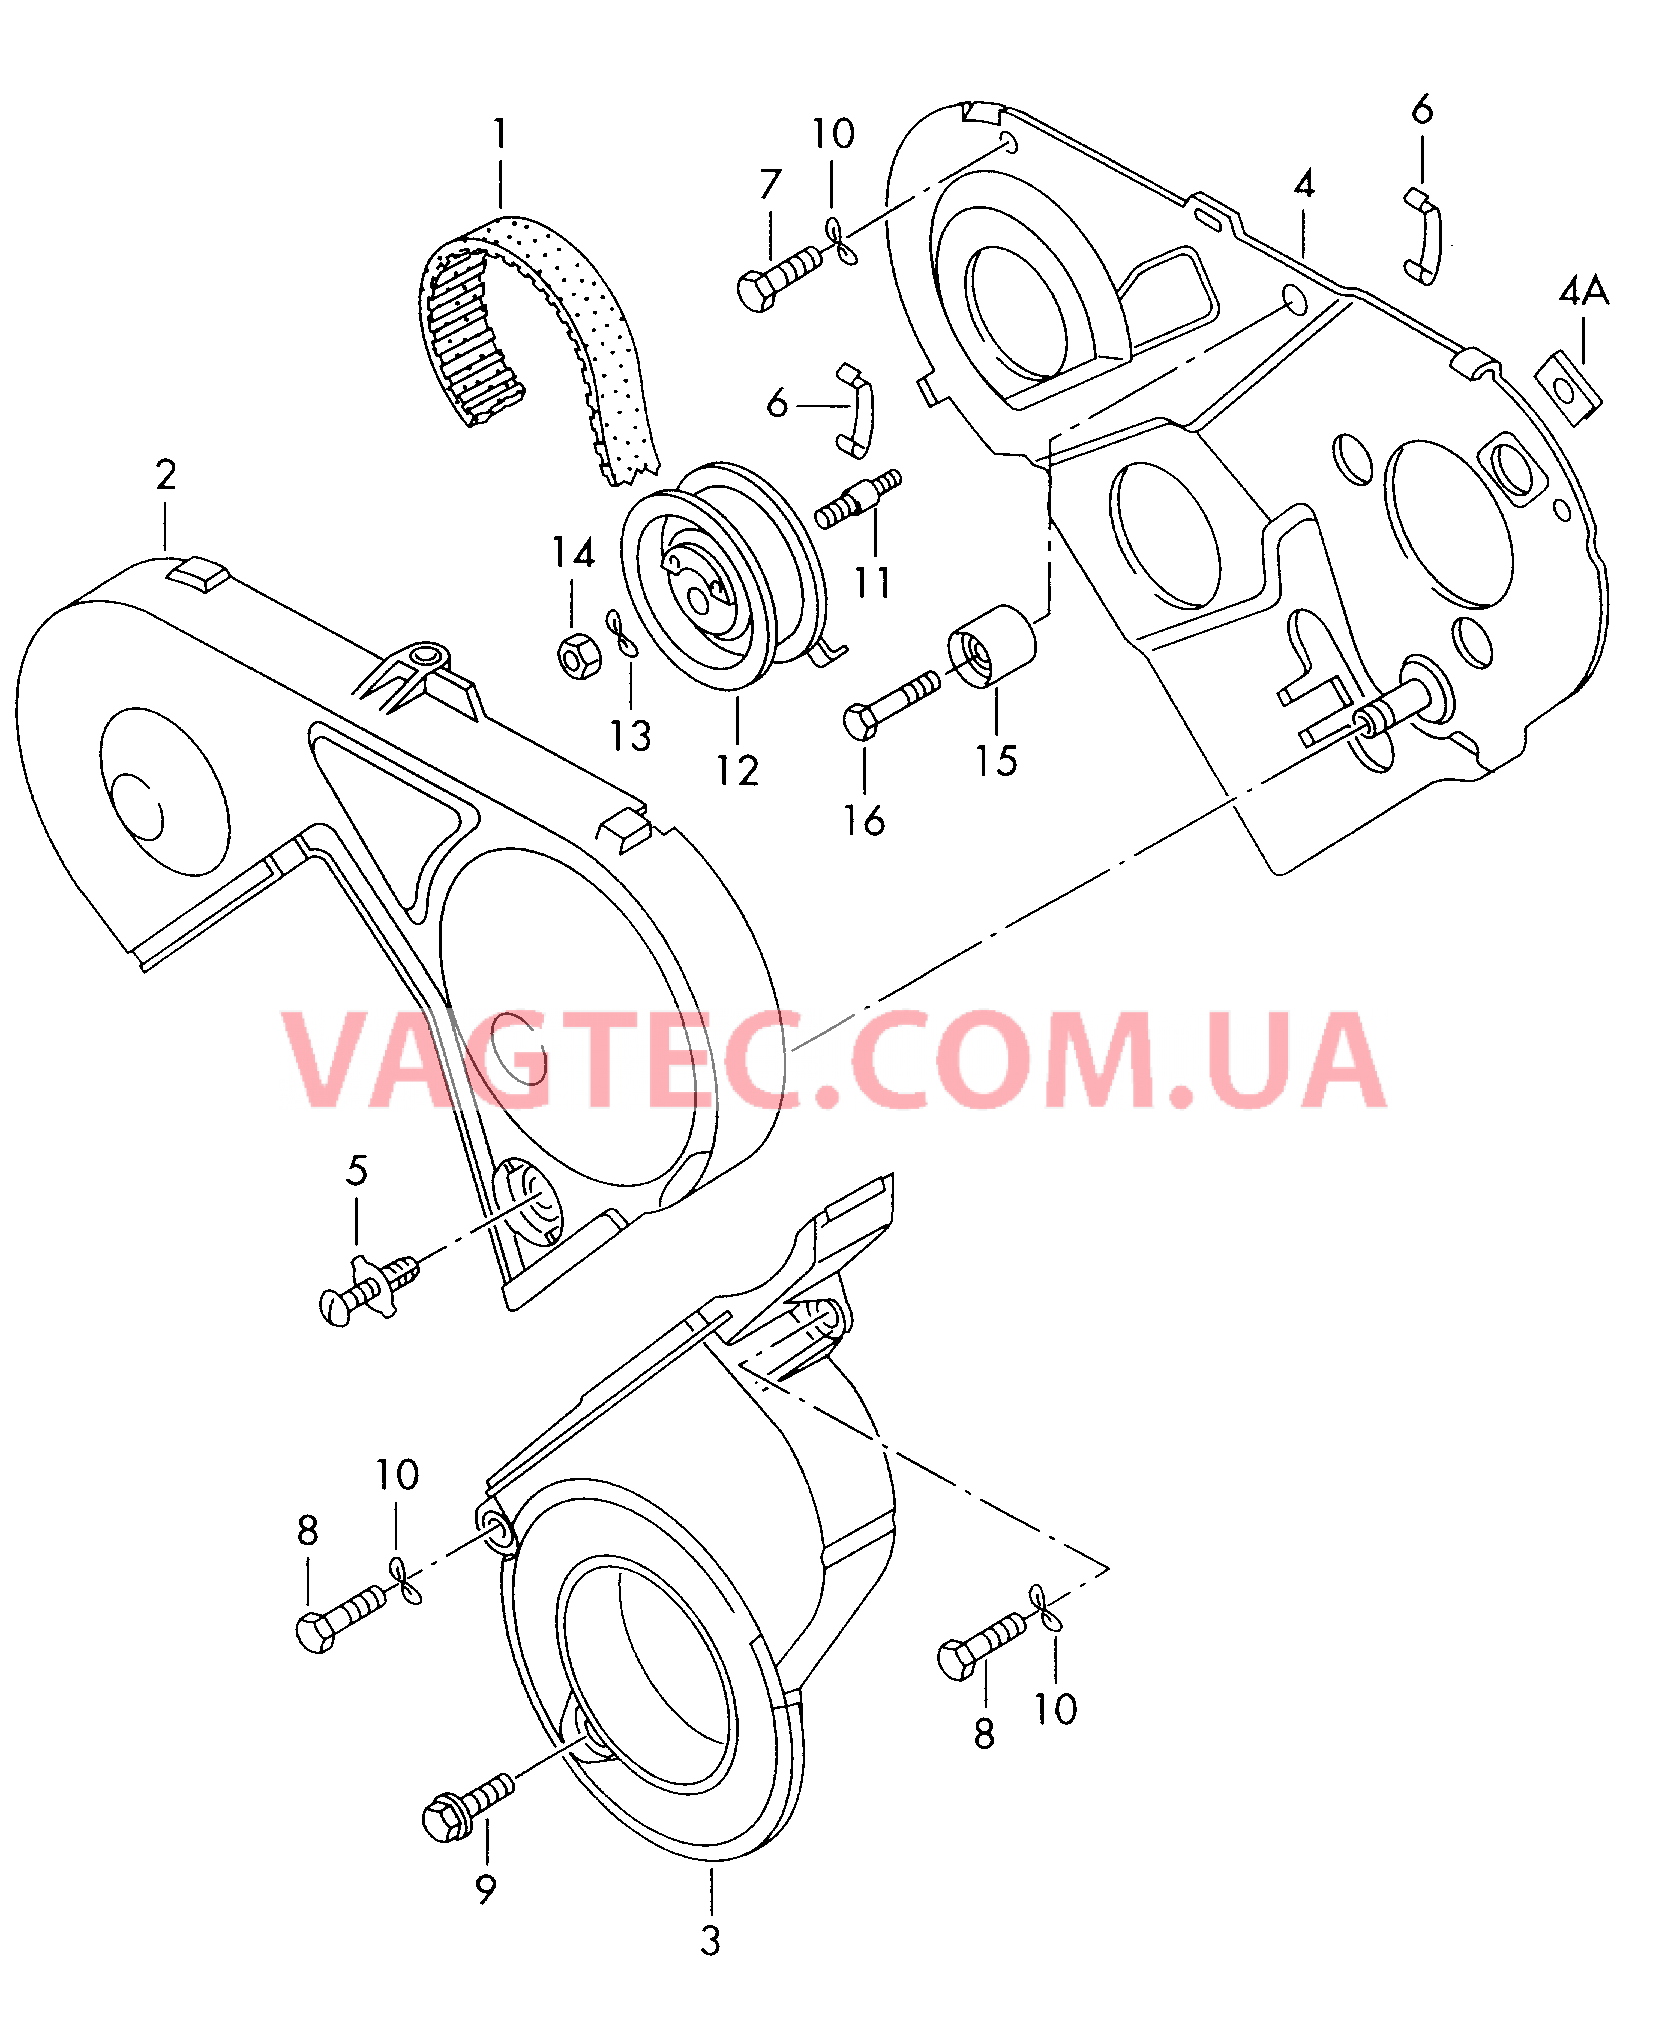 Ремень зубчатый, Защитный кожух ремня для VW РOLO   для VOLKSWAGEN Polo 2000